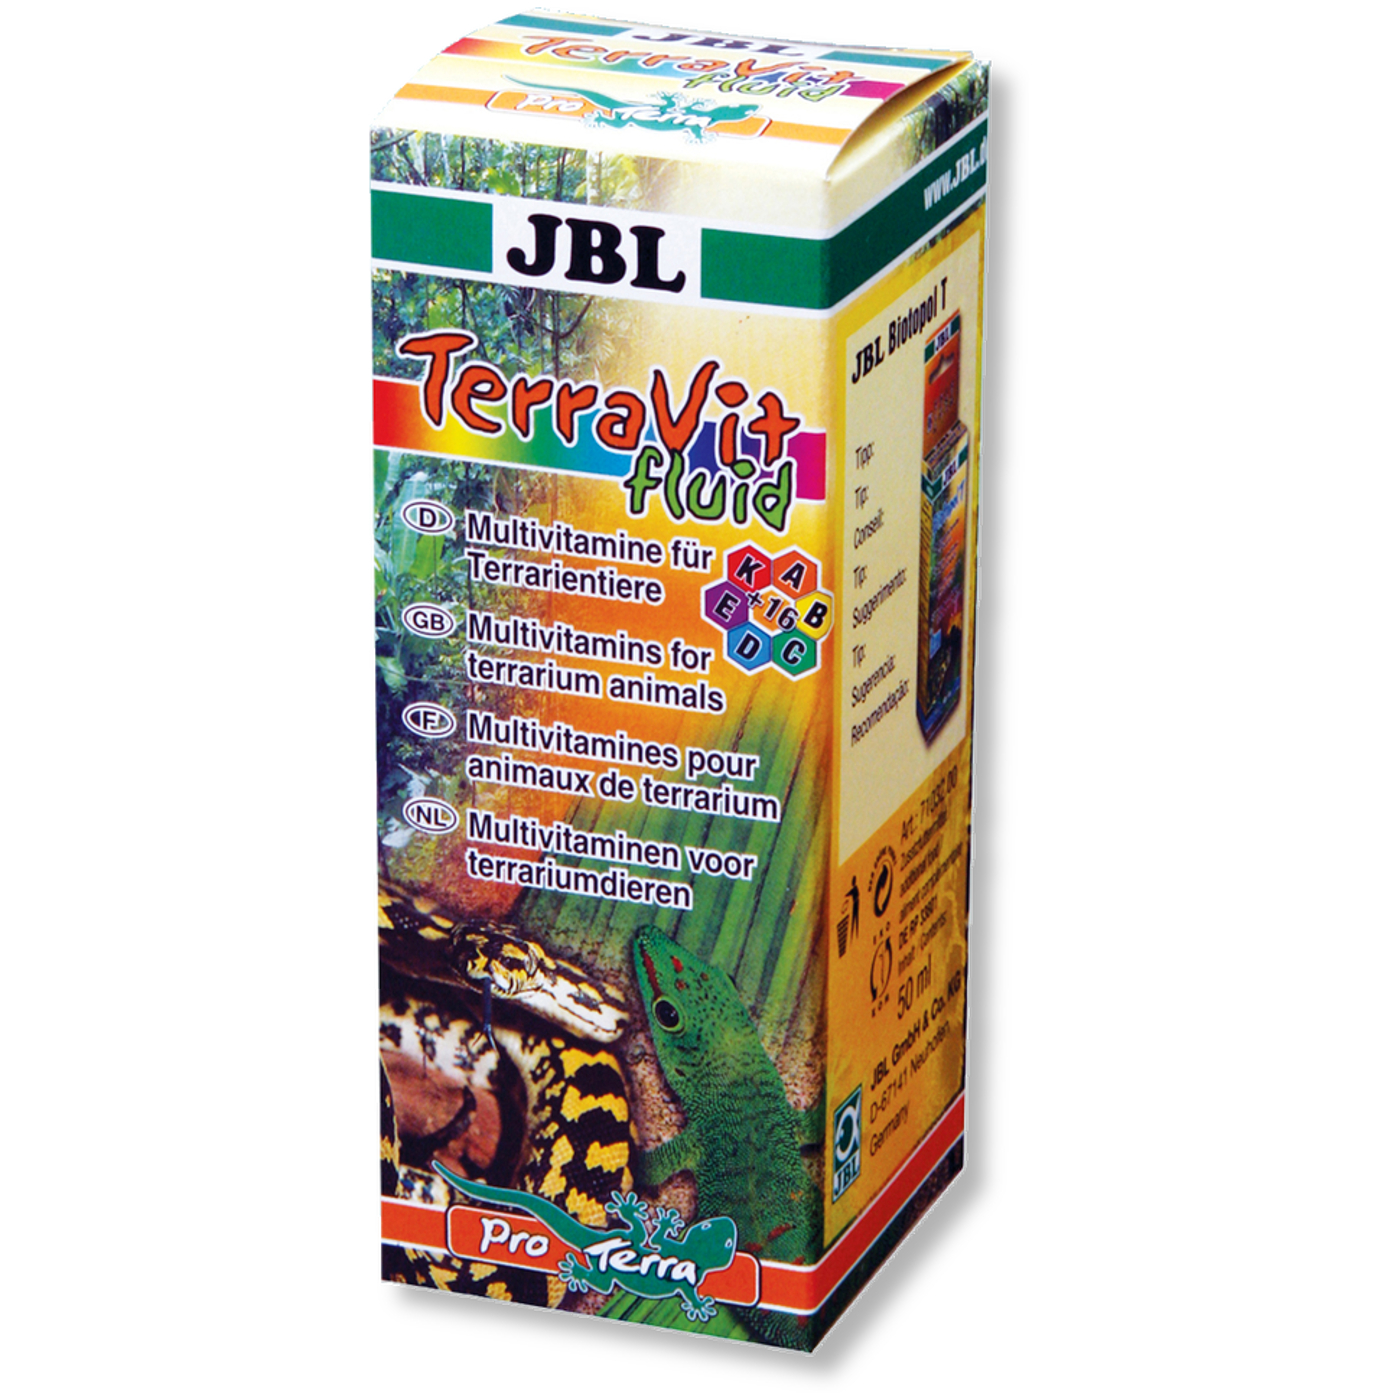 JBL TerraVit fluid 50 ml (Multivitamine, Spurenelemente)